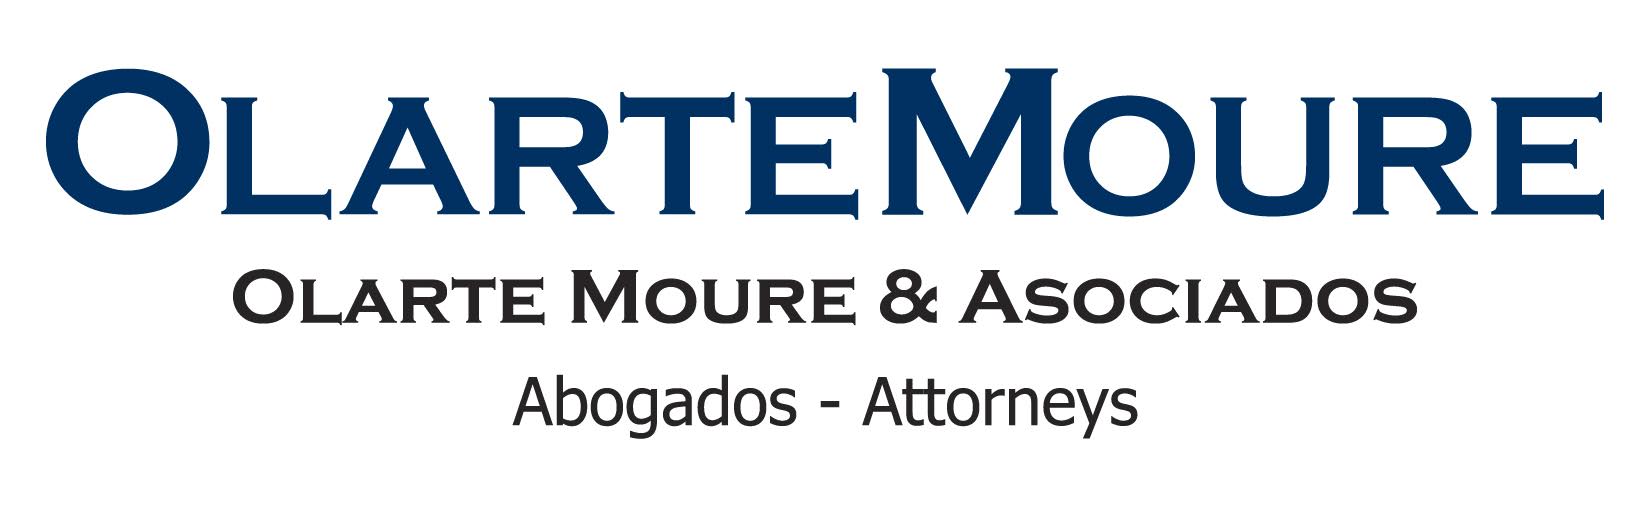 Olarte Moure & Associates